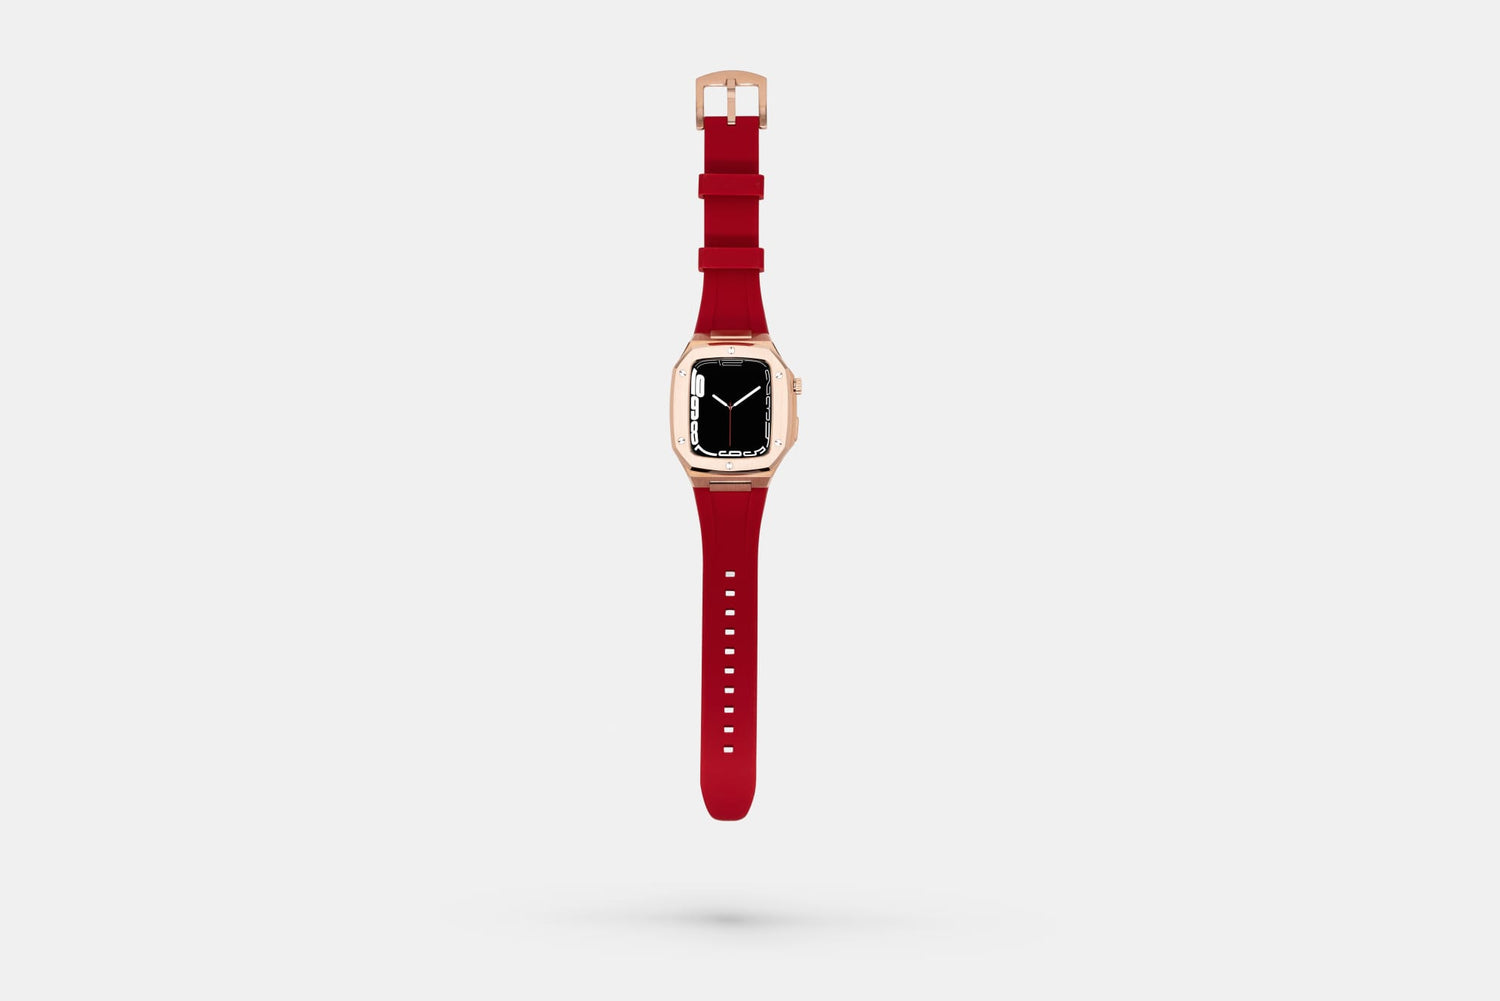 Everose Sport - Accessoire Apple Watch - Coque Or Rose et bracelet Silicone rouge Appel Watch 44mm ouvert